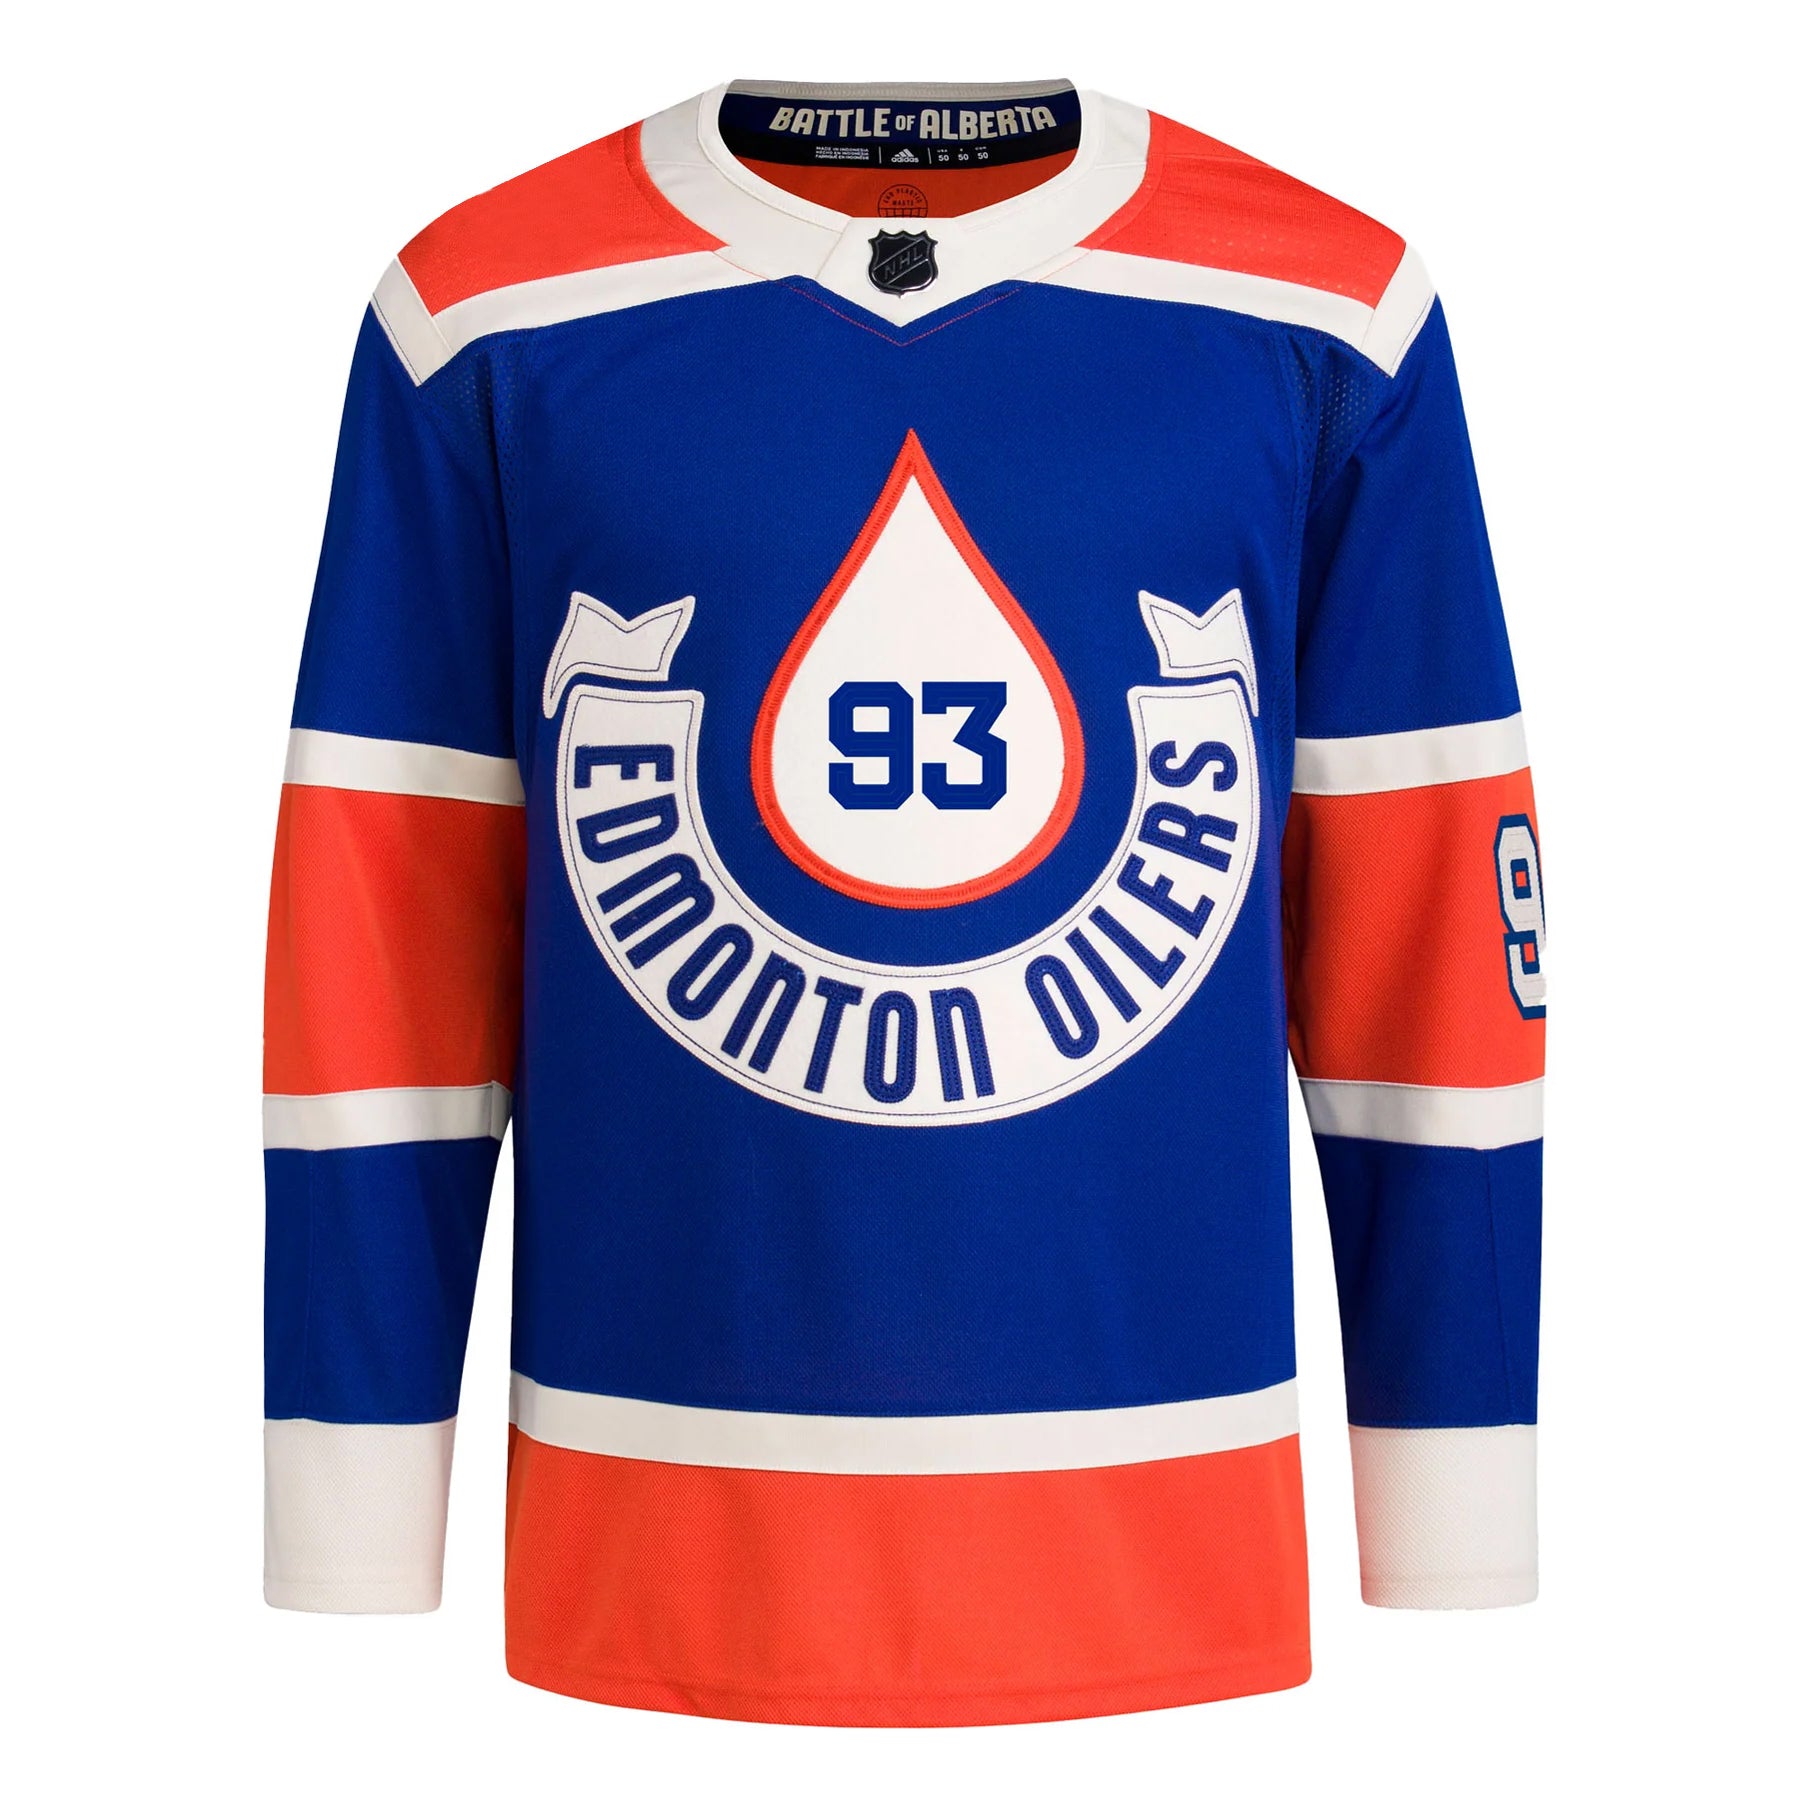 Ryan Nugent-Hopkins Edmonton Oilers adidas Authentic Heritage